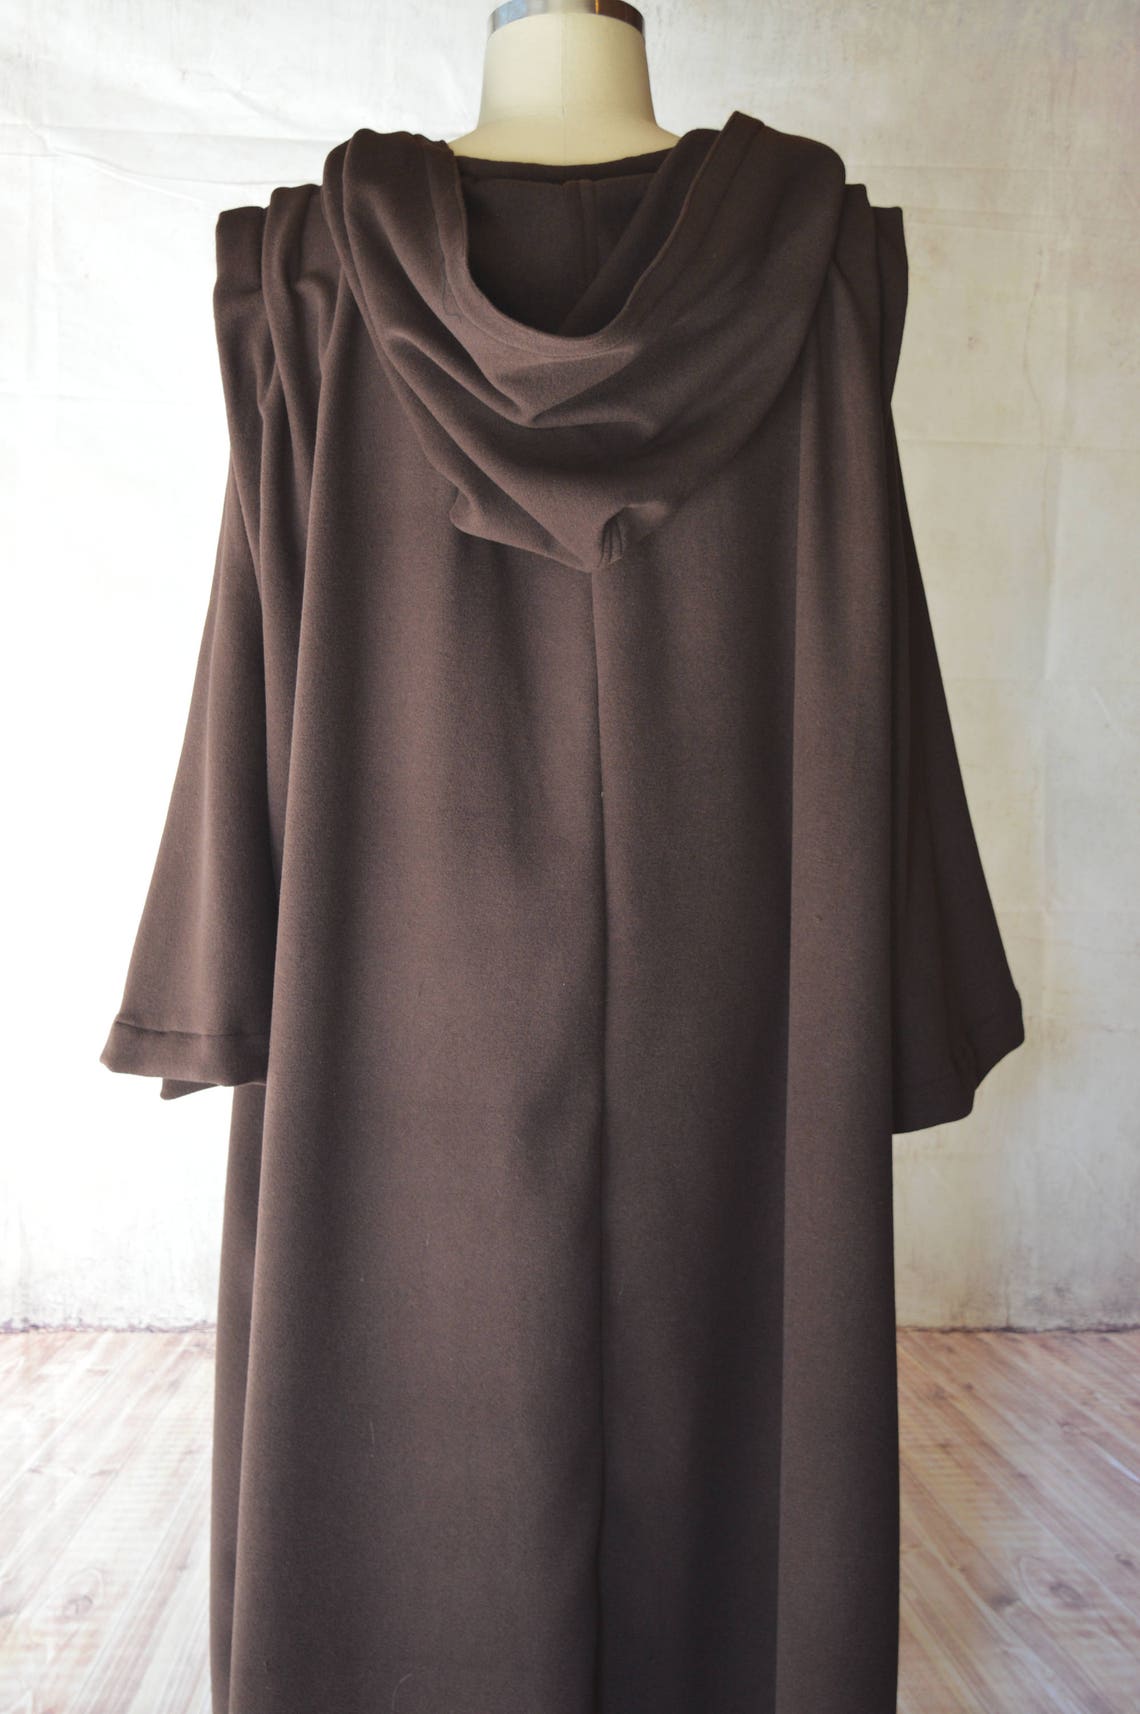 Jedi robe inspiration Custom Costume made to order Star | Etsy